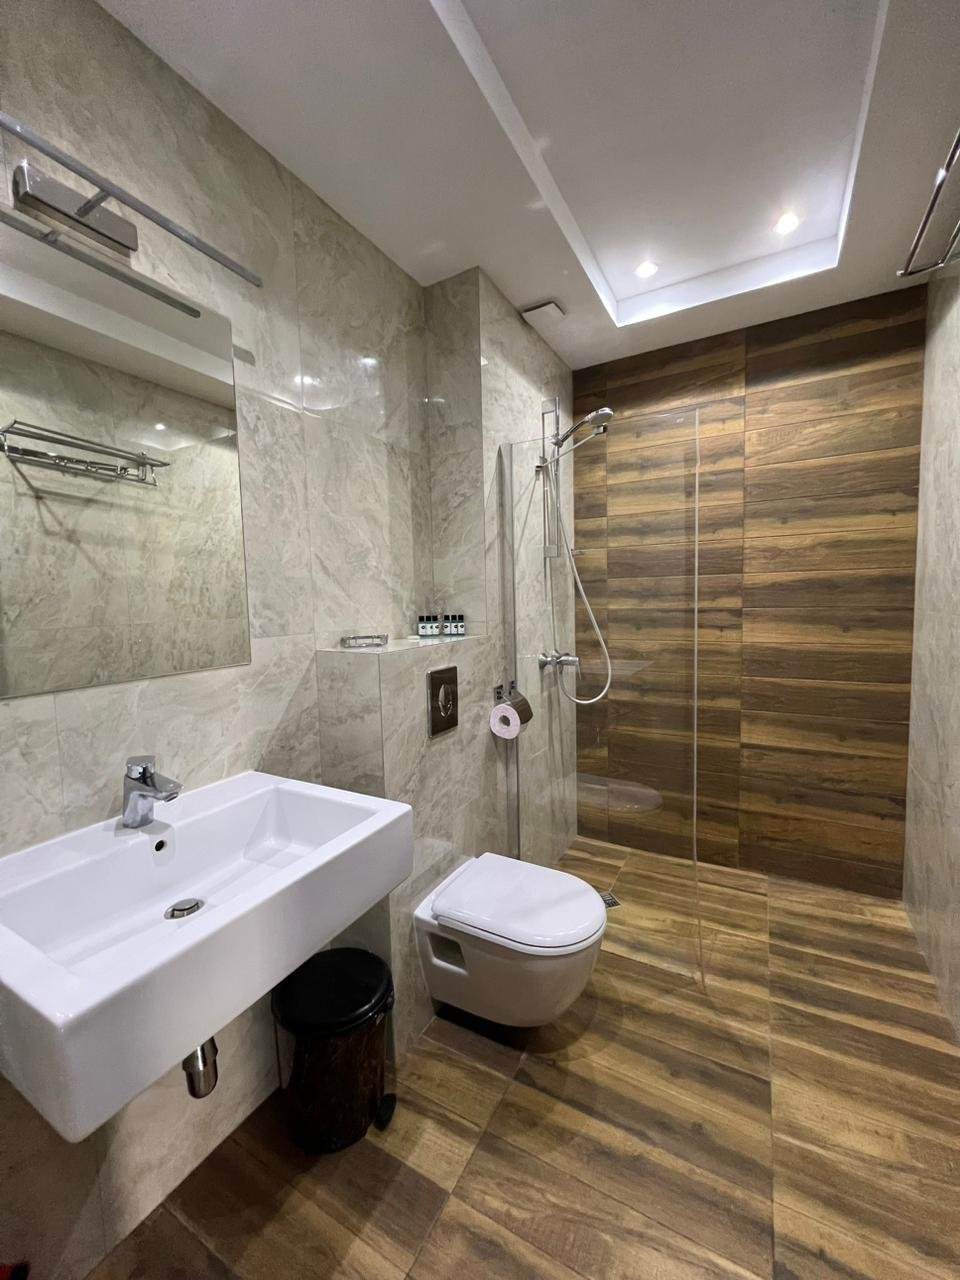 1-bedroom apartment in Orbi Sea Towers id-1052 -  rent an apartment in Batumi